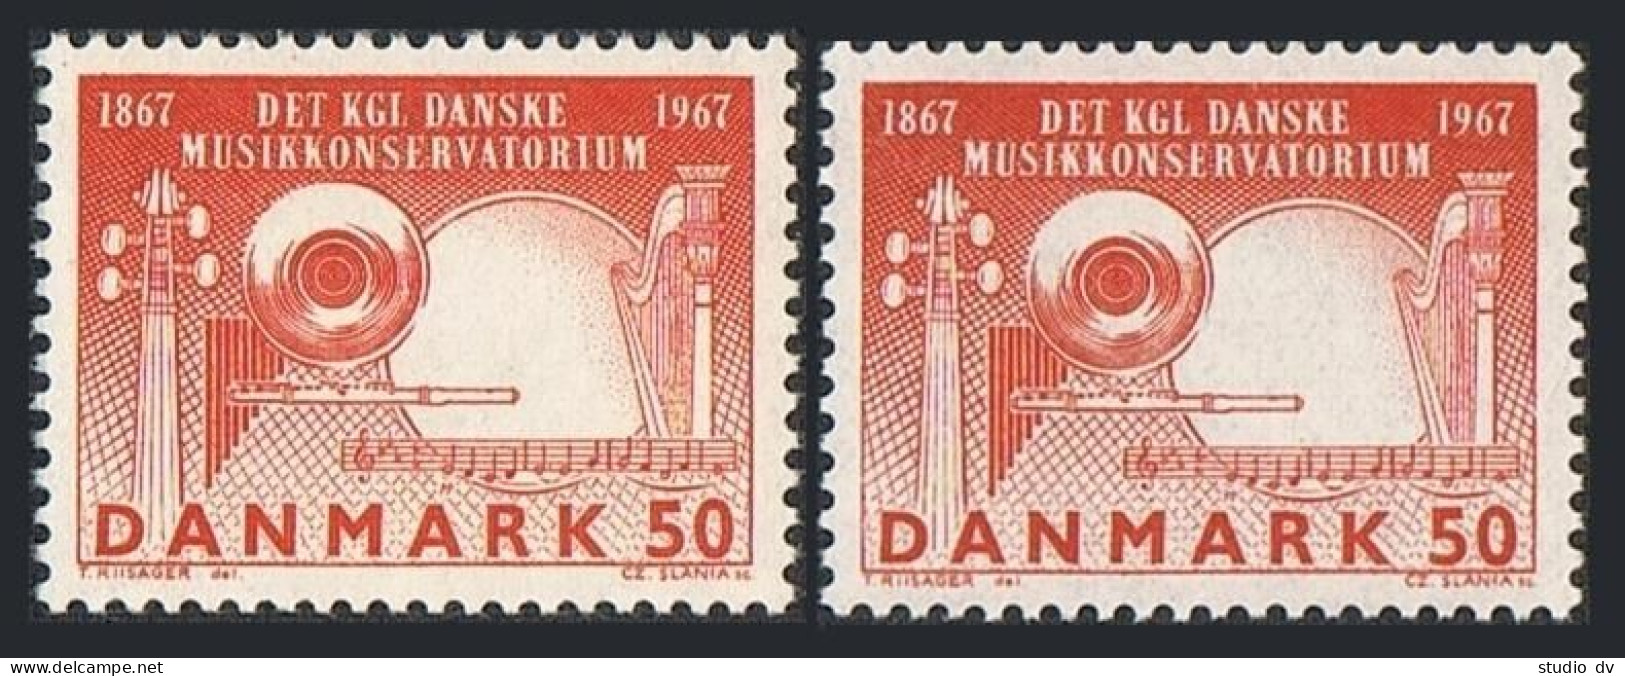 Denmark 430 Two Var, MNH. Michel 449x-449y. Royal Danish Academy Of Music, 1967. - Ungebraucht